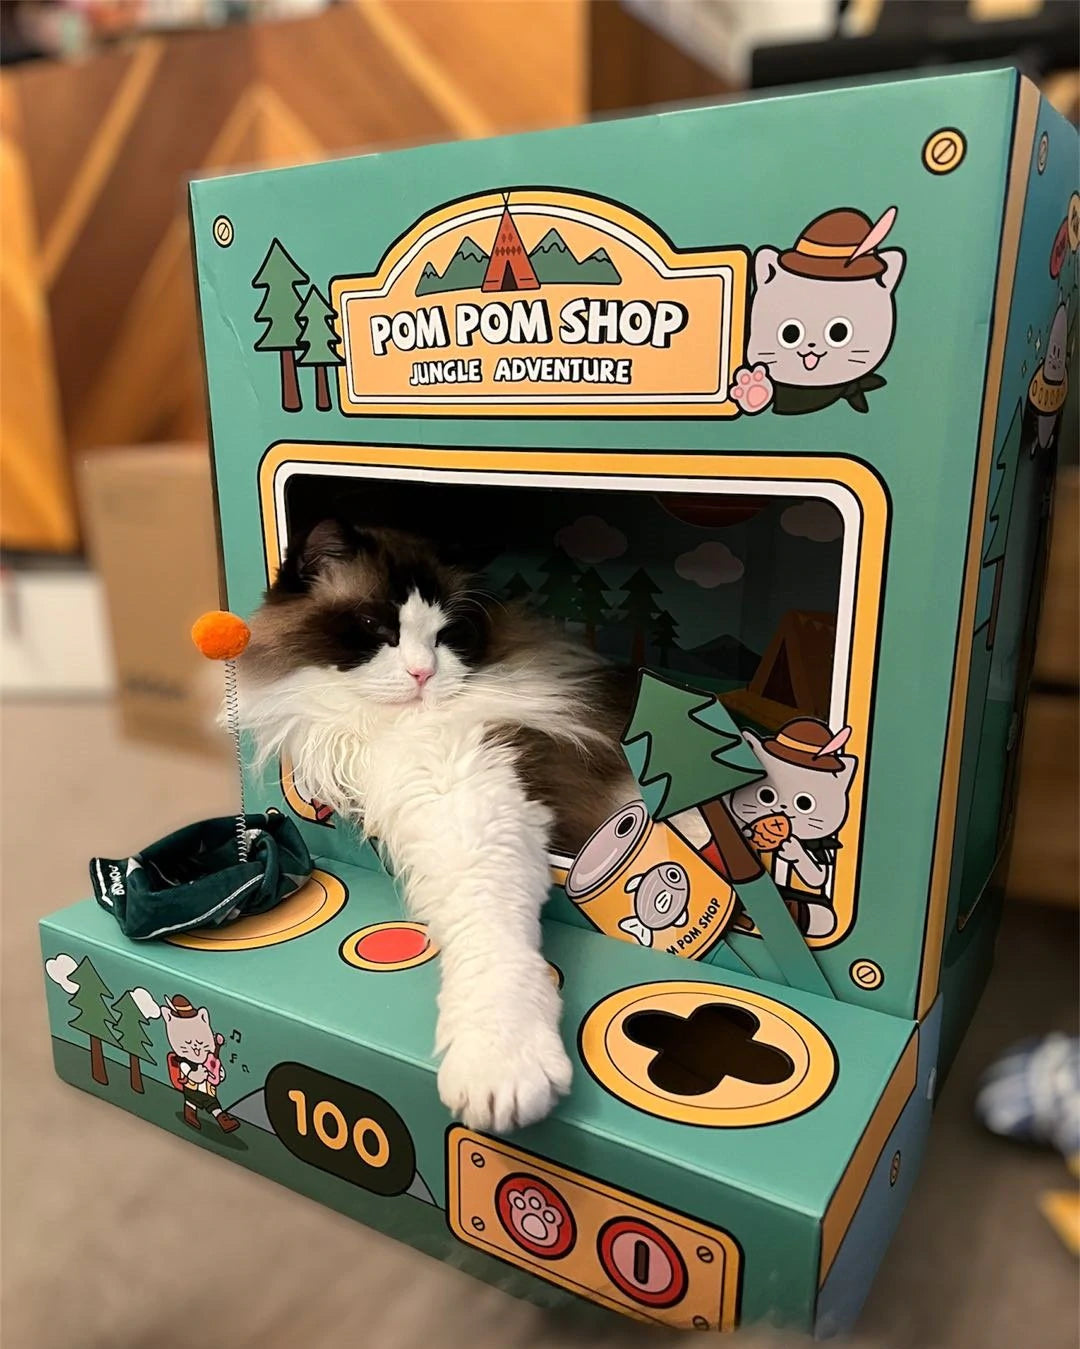 POM POM SHOP - Cat Scratcher - Forest Video Arcade